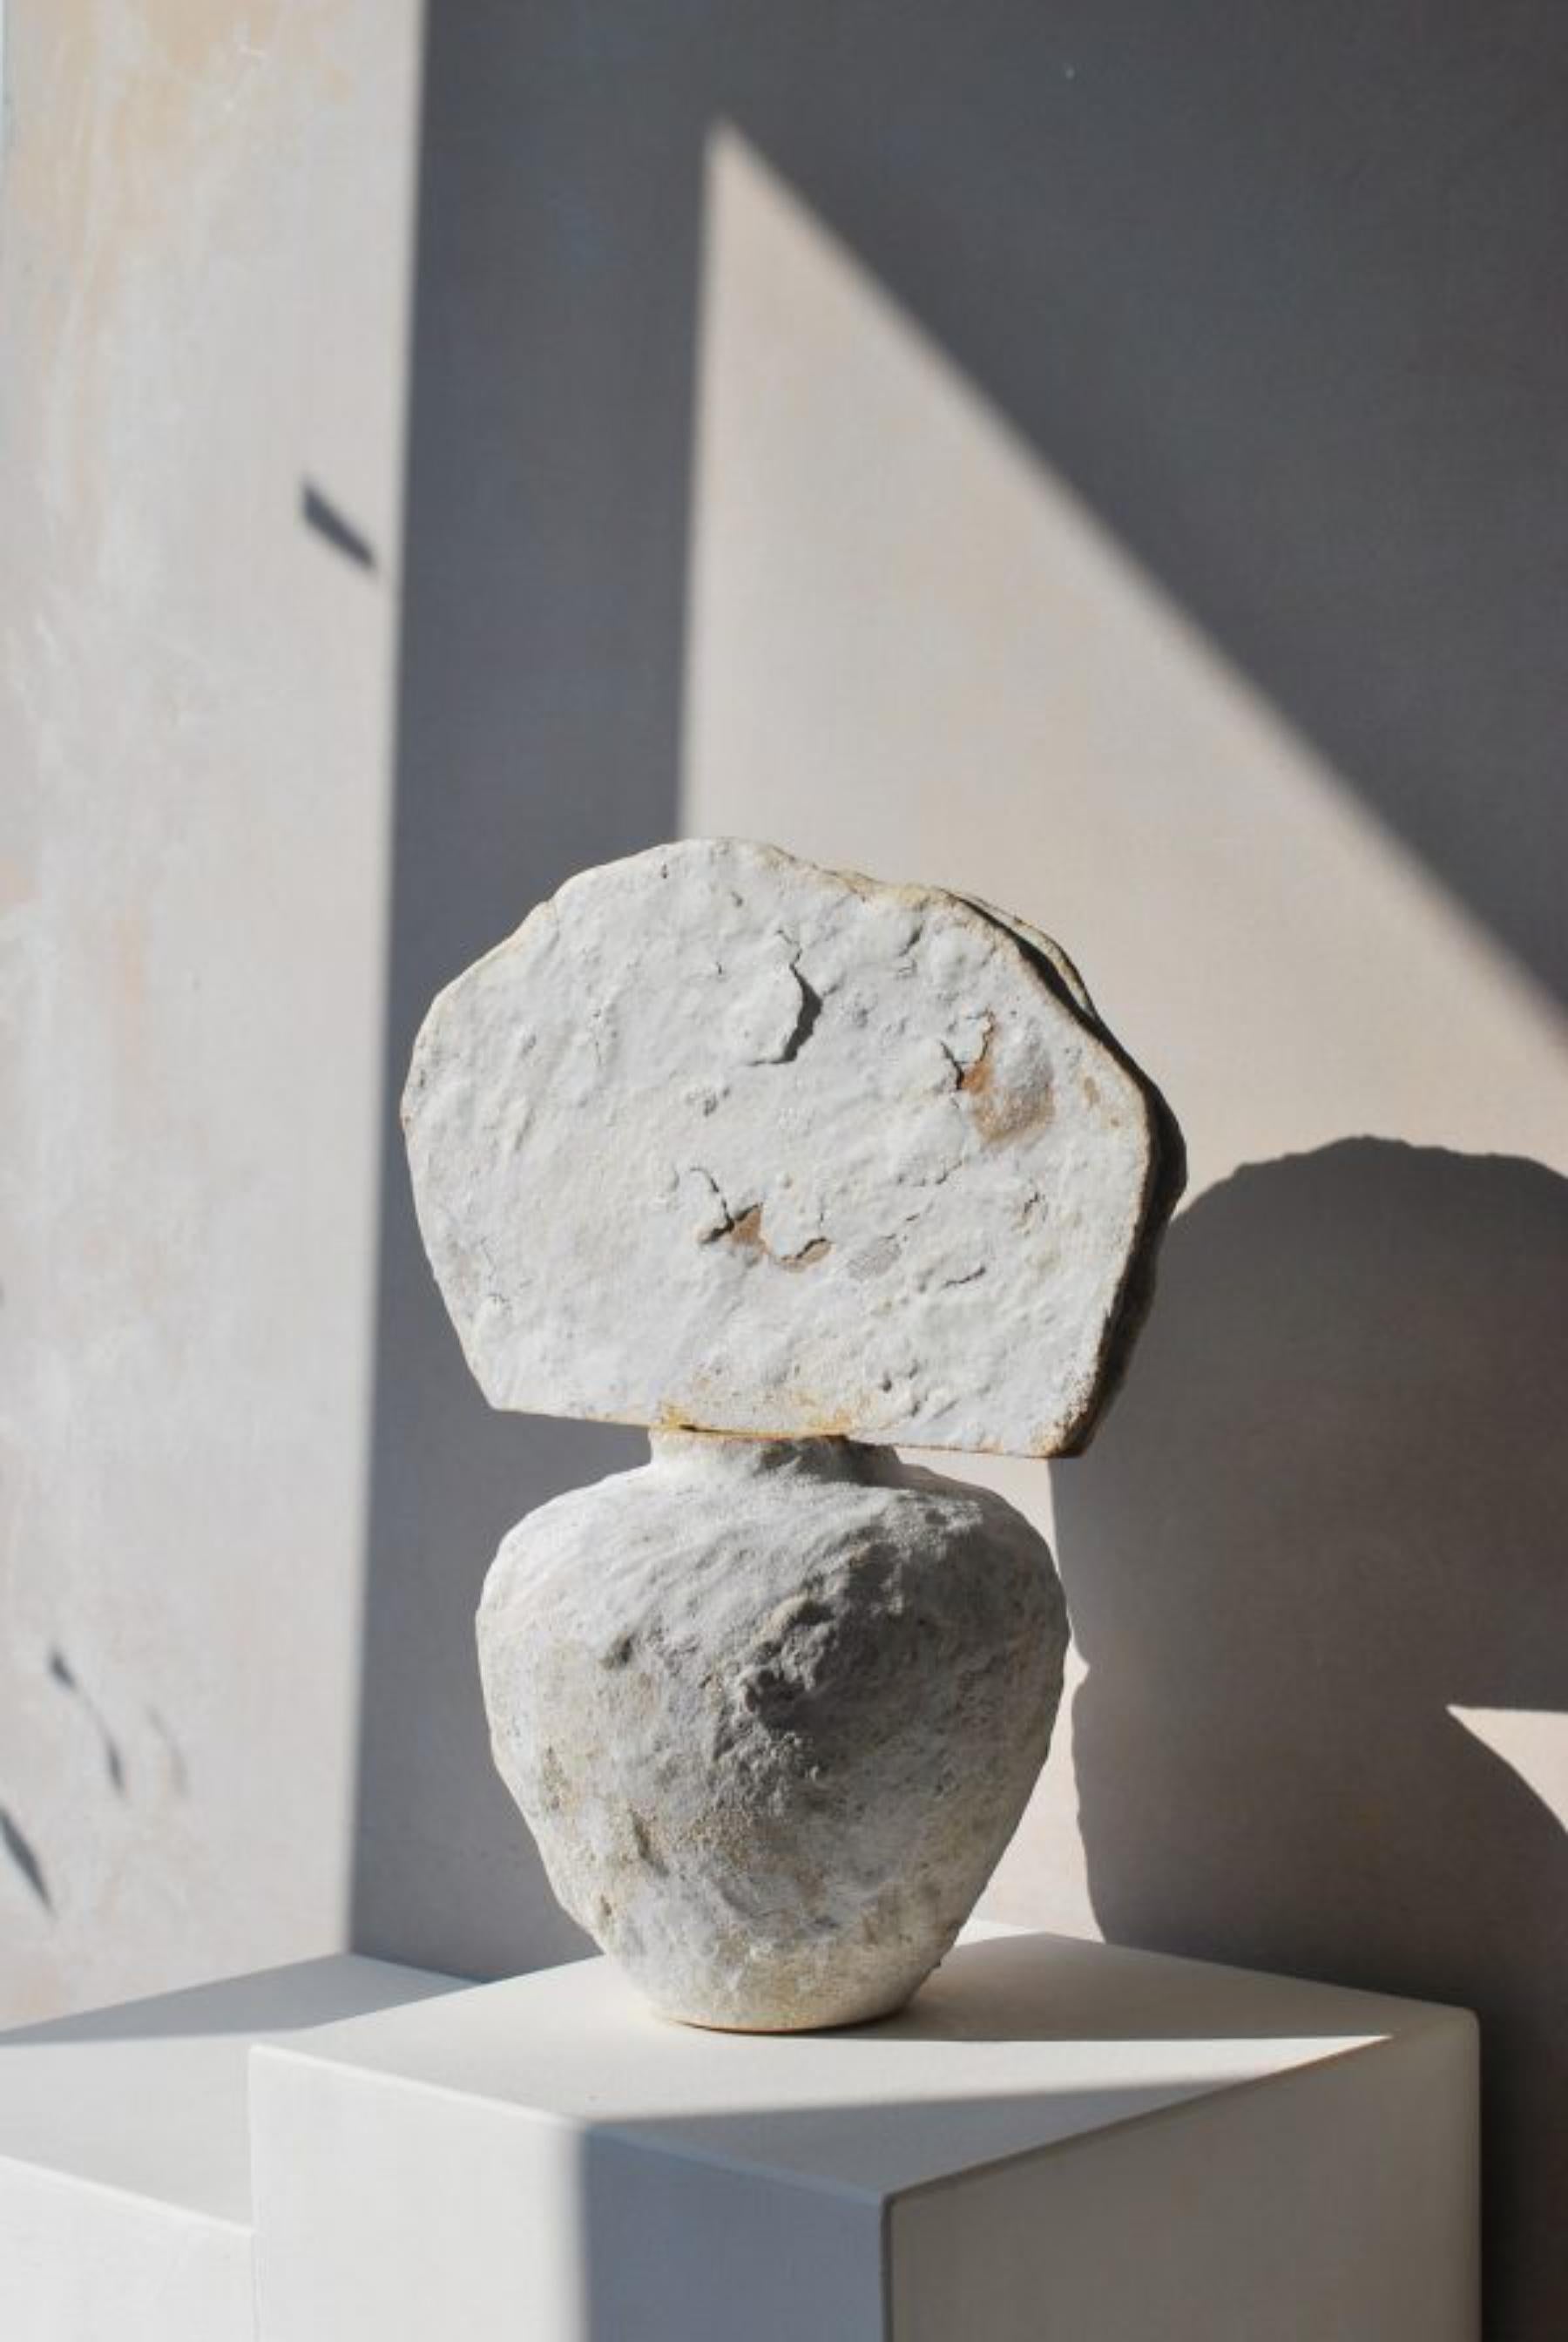 Large Sandstone Vessel Vase by Moïo Studio
Unique Piece
Dimensions: W 32 x D 18 x H 38 cm
Materials: White glaze and porcelain on tan stoneware

Moïo Studio is the Berlin-based ceramic art studio of French-Palestinian artist Maia Beyrouti. It